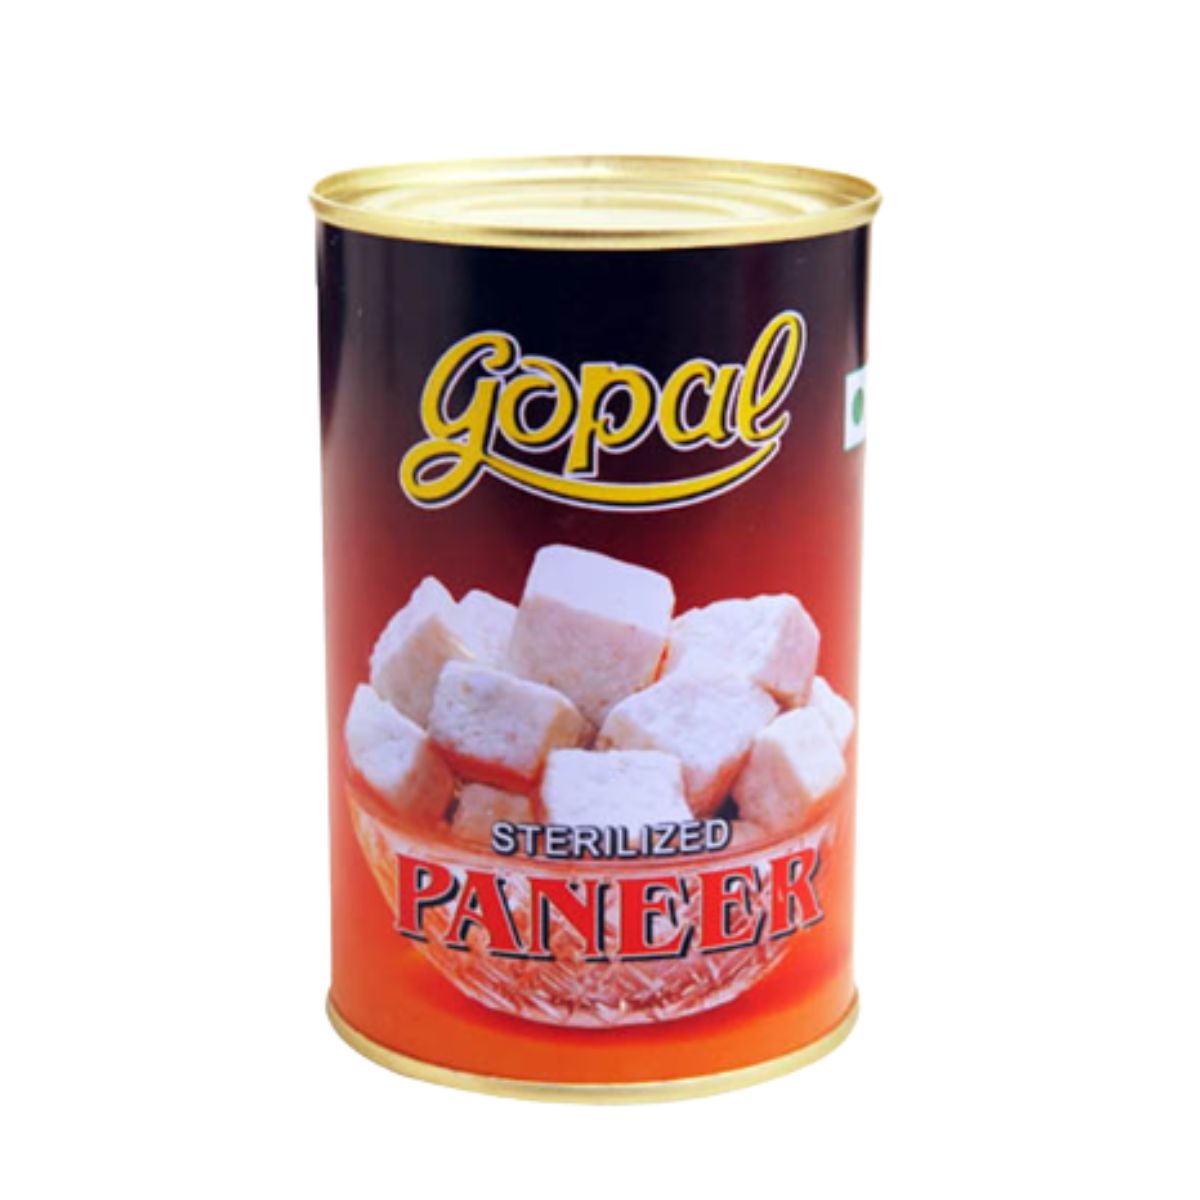 Gopal Sterilized Paneer - 825g